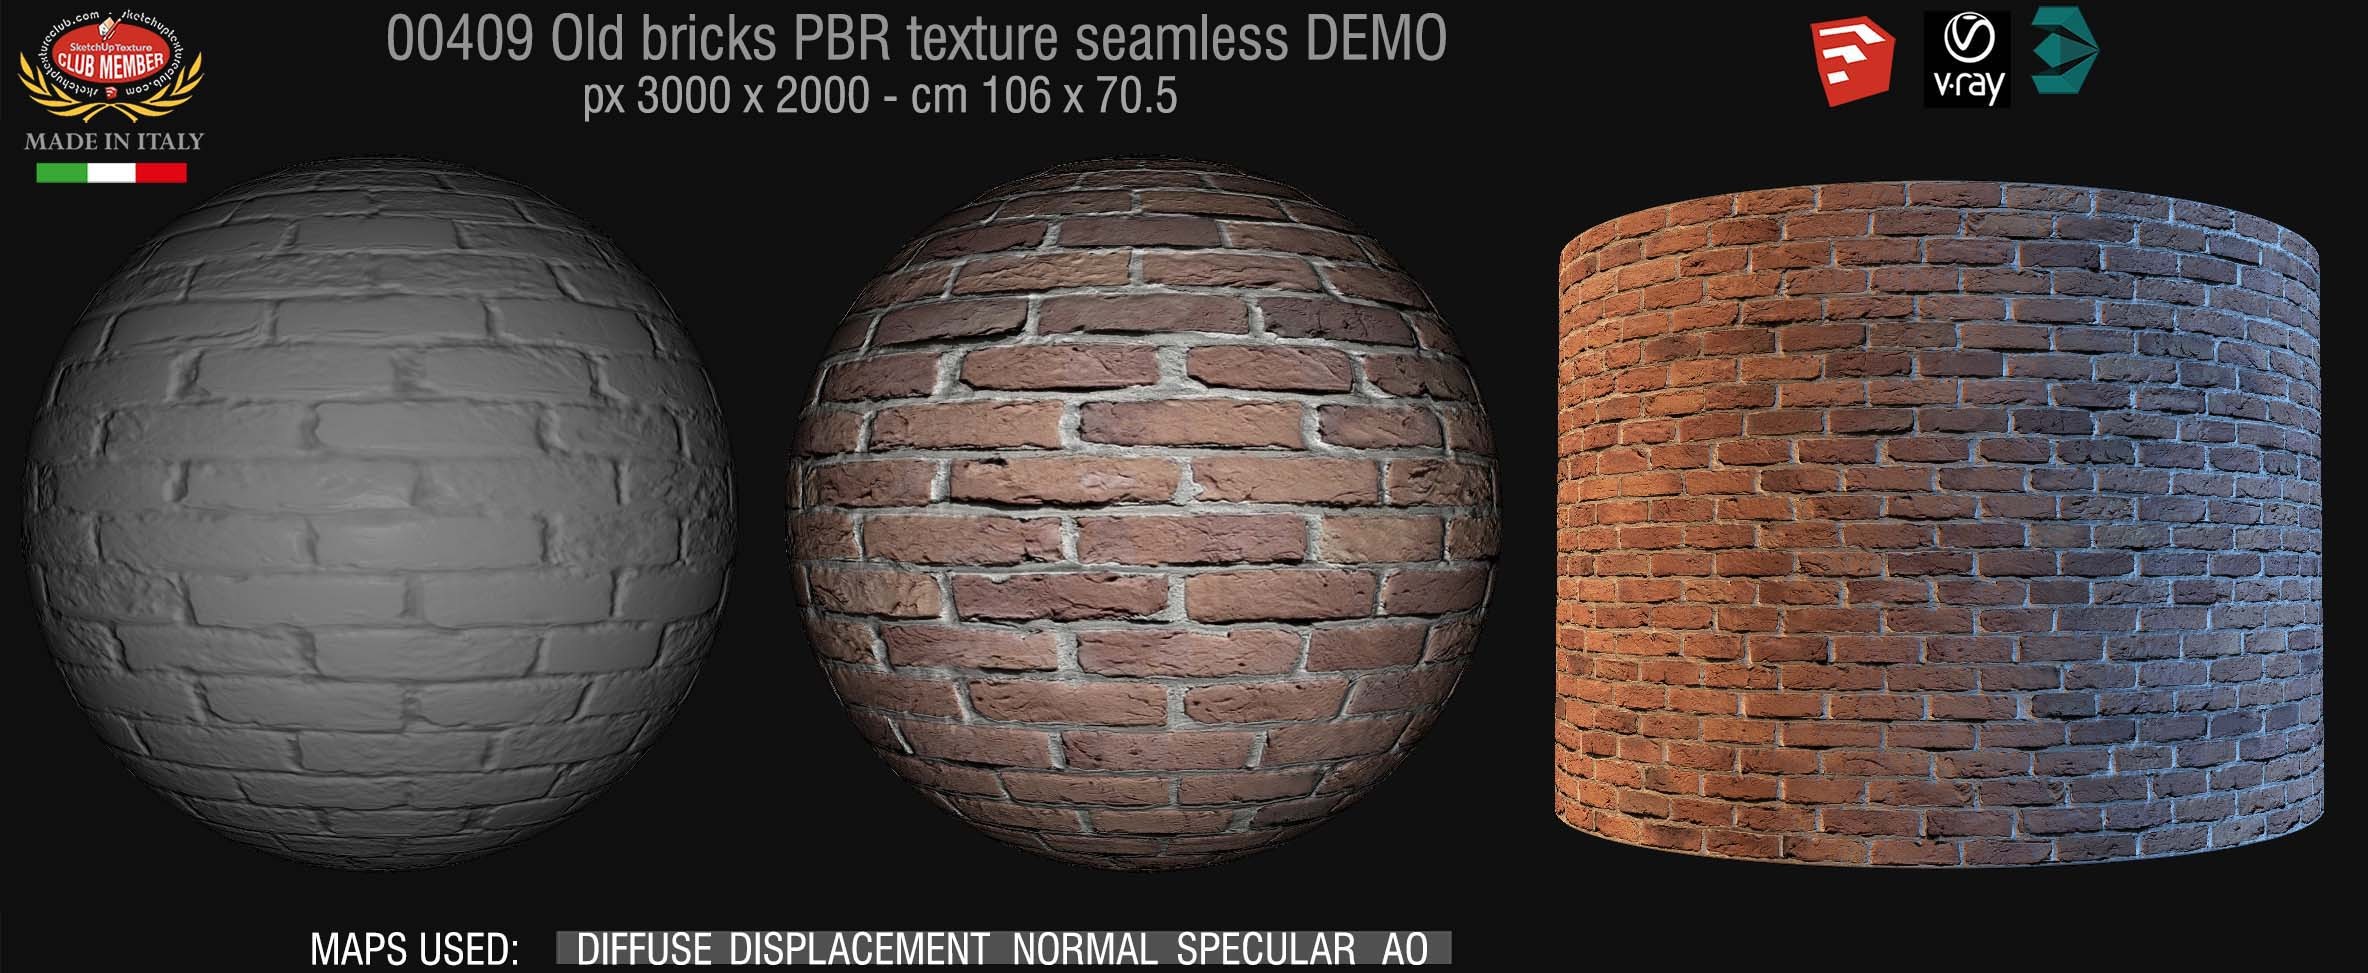 00409 Old bricks PBR texture seamless DEMO